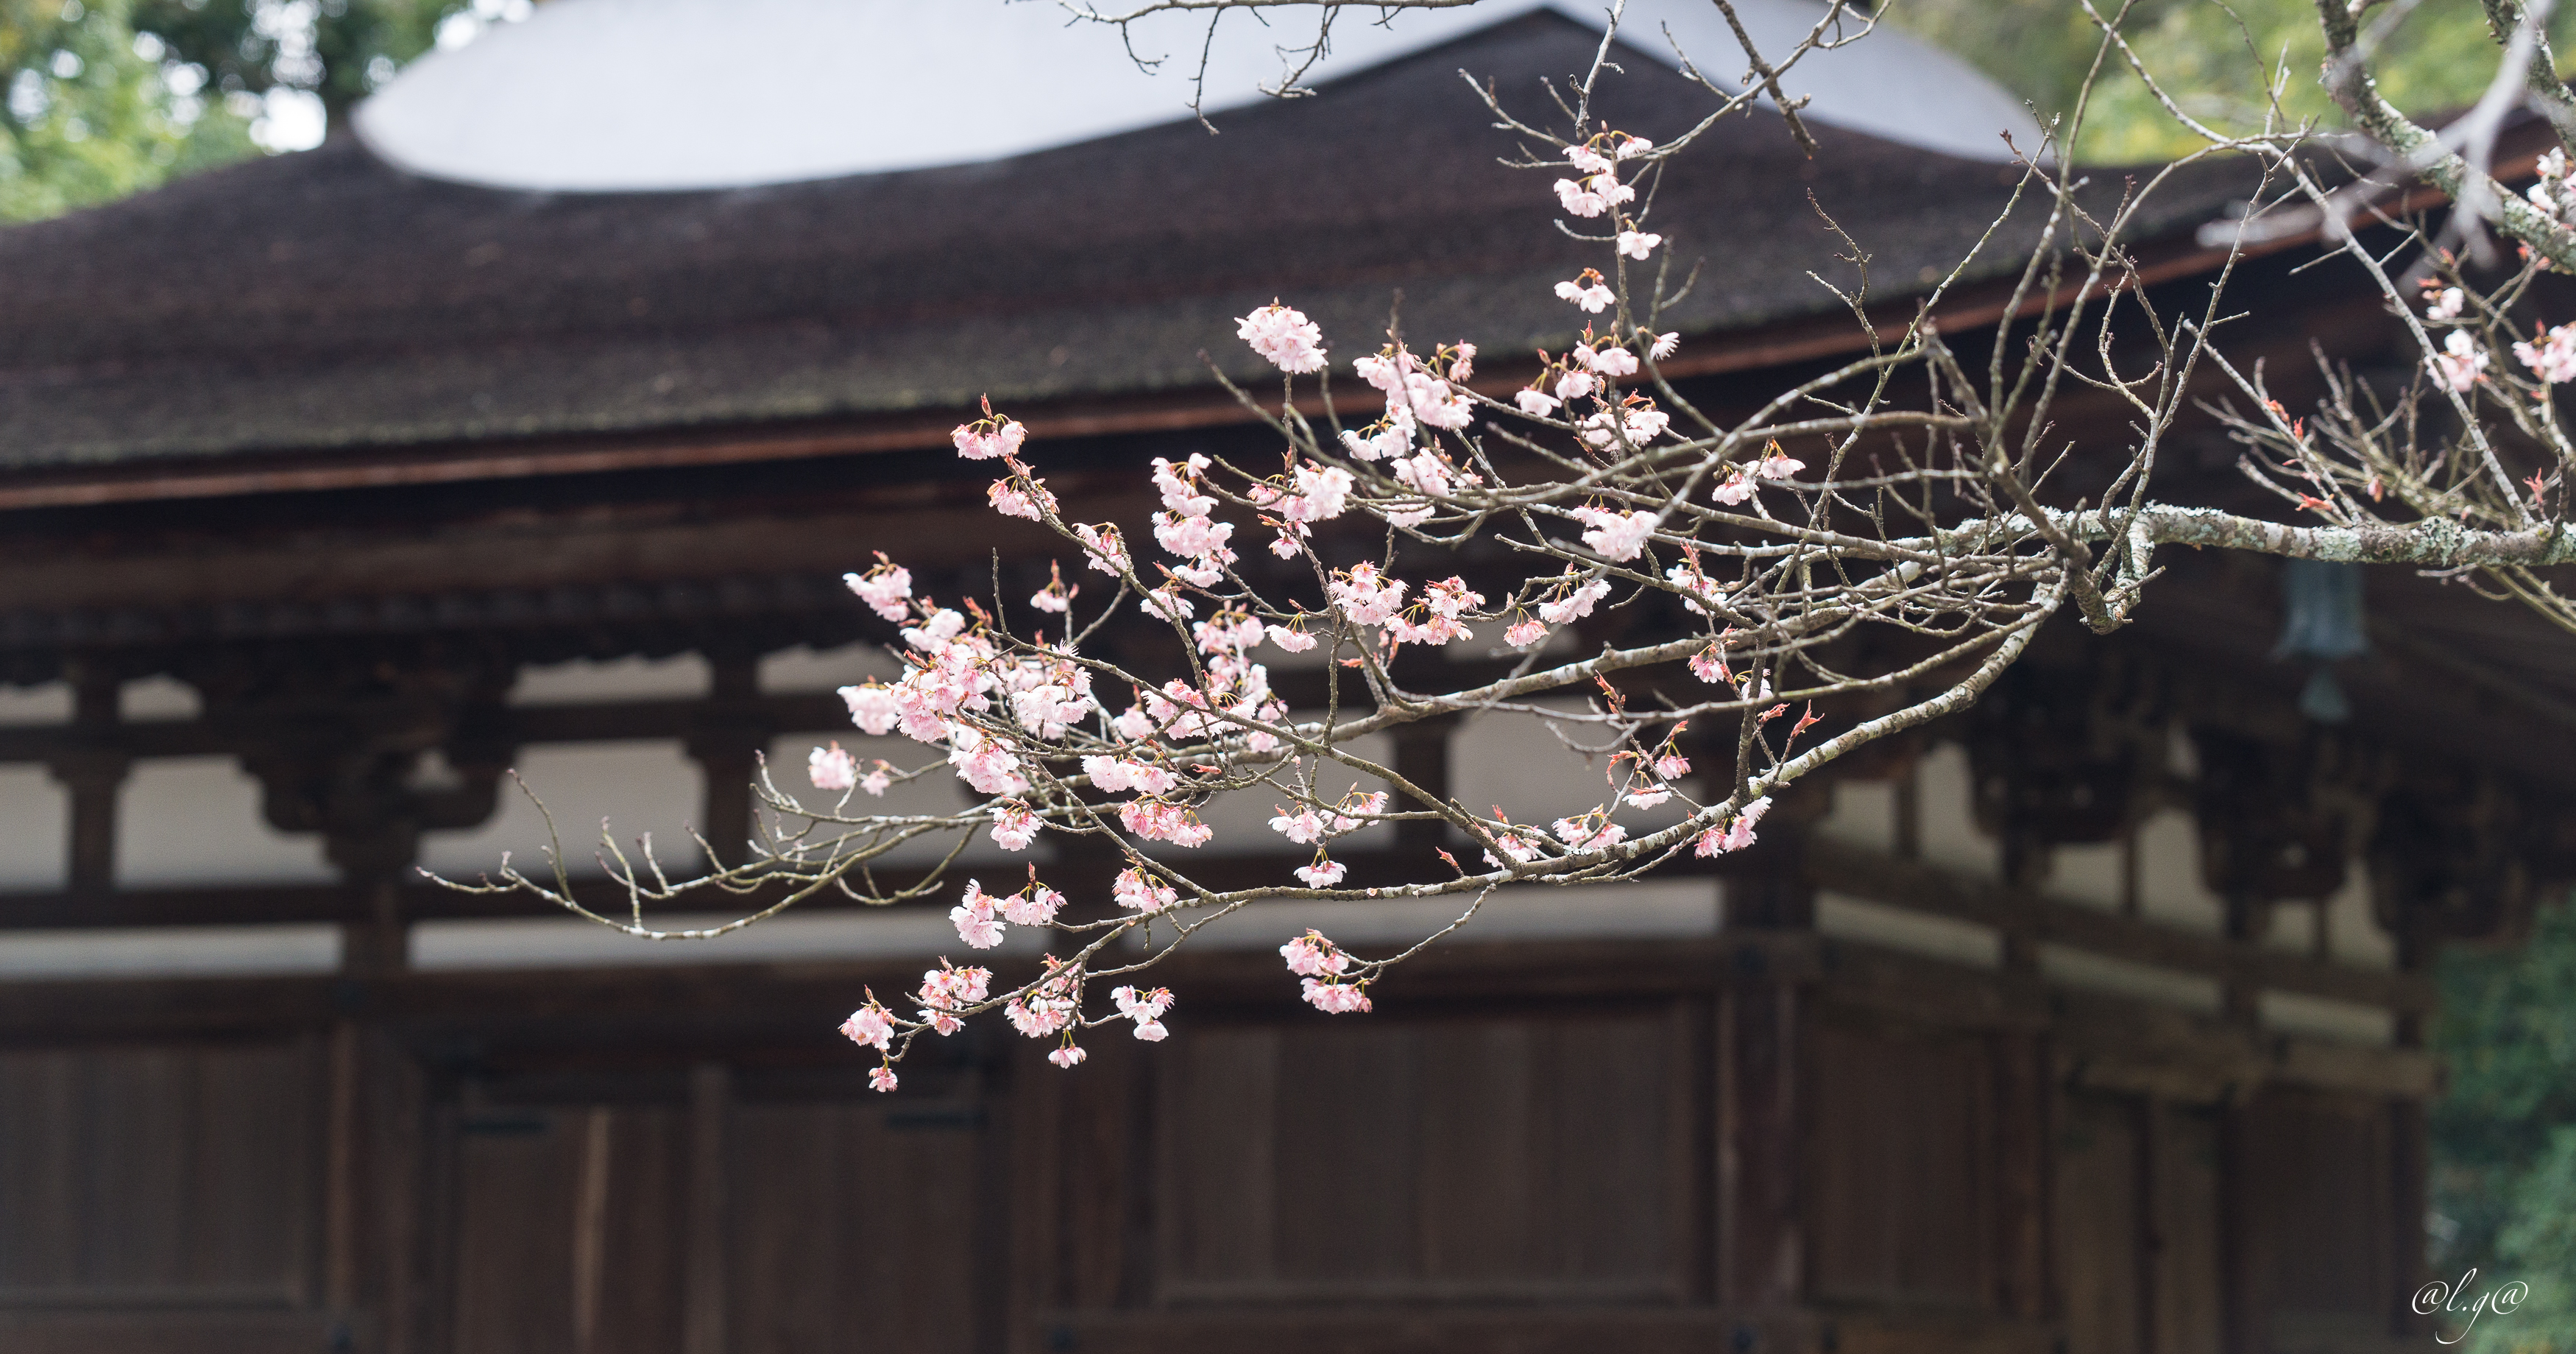 Otsu : Le Temple Ishiyama-Dera de la Montagne Rocheuse